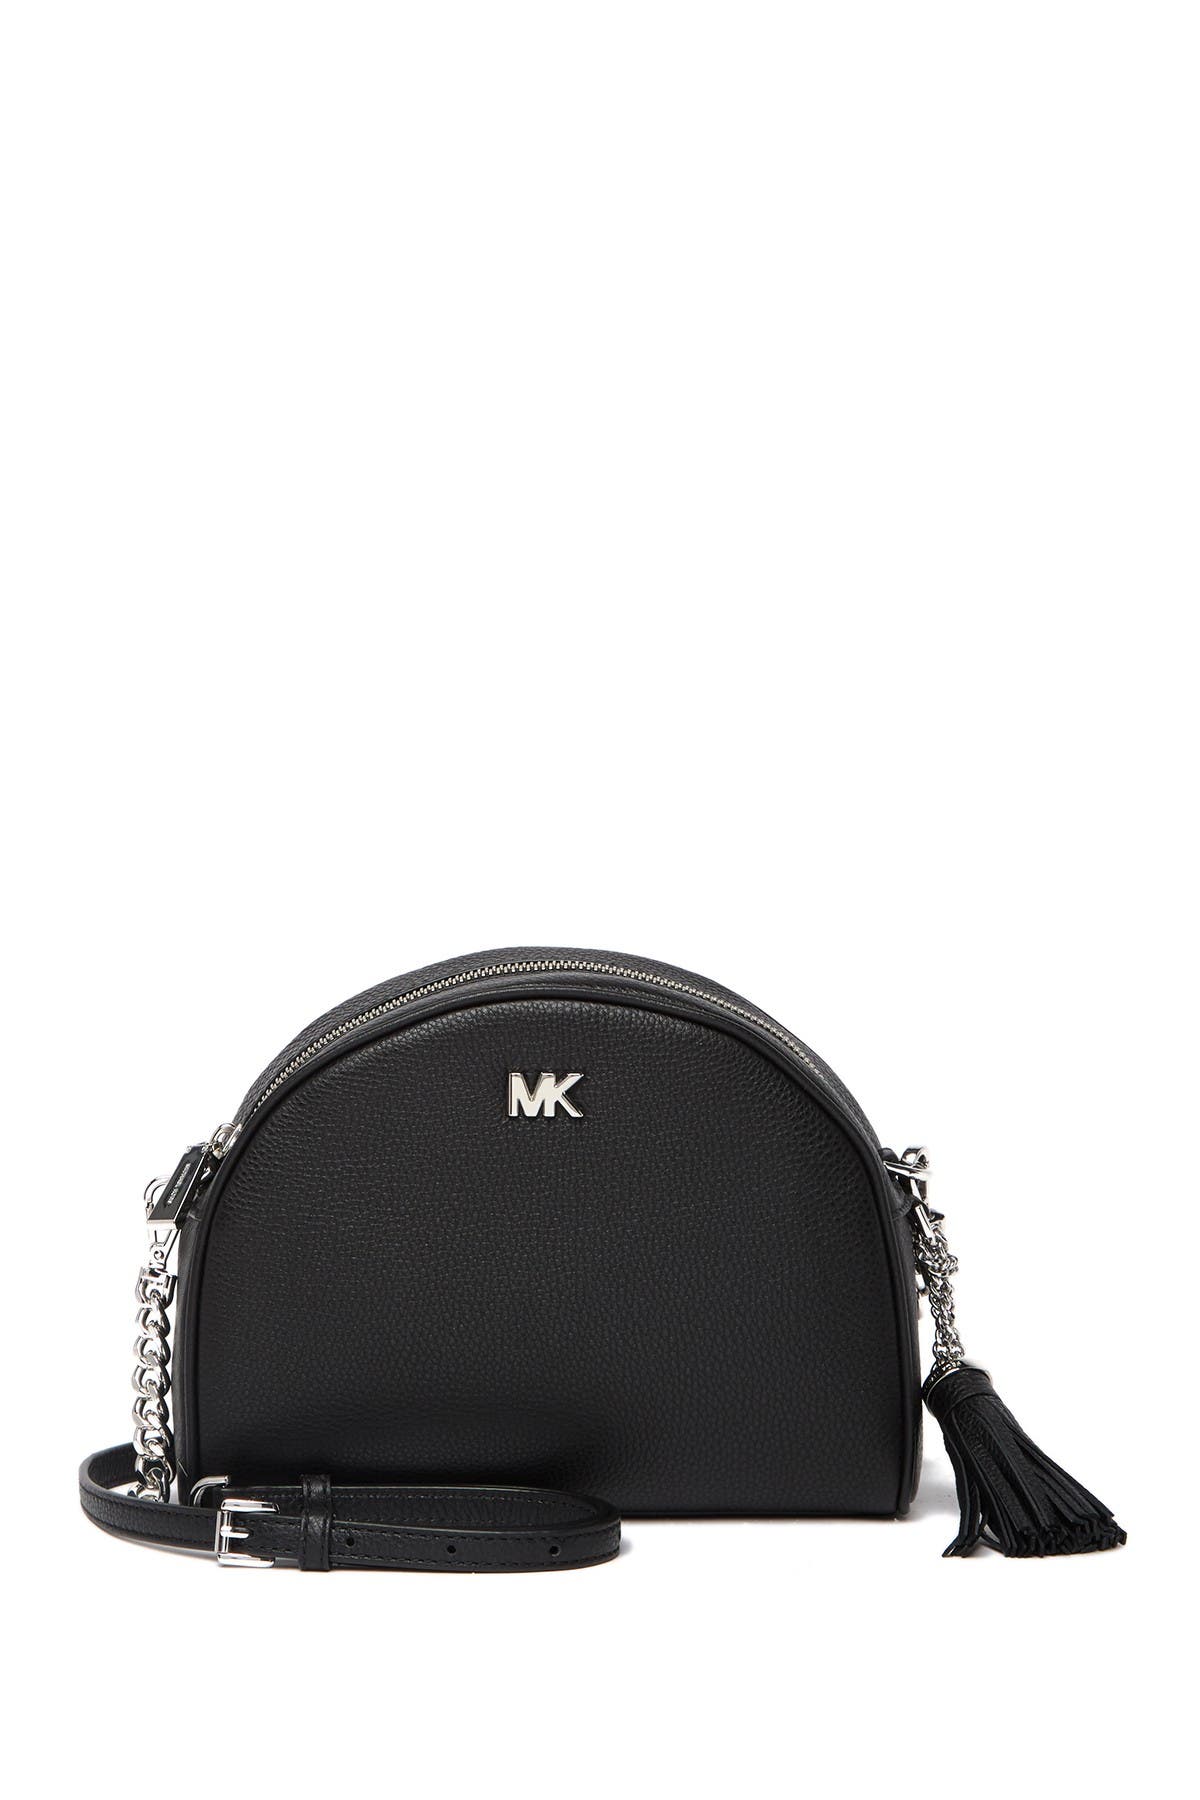 mk half moon bag